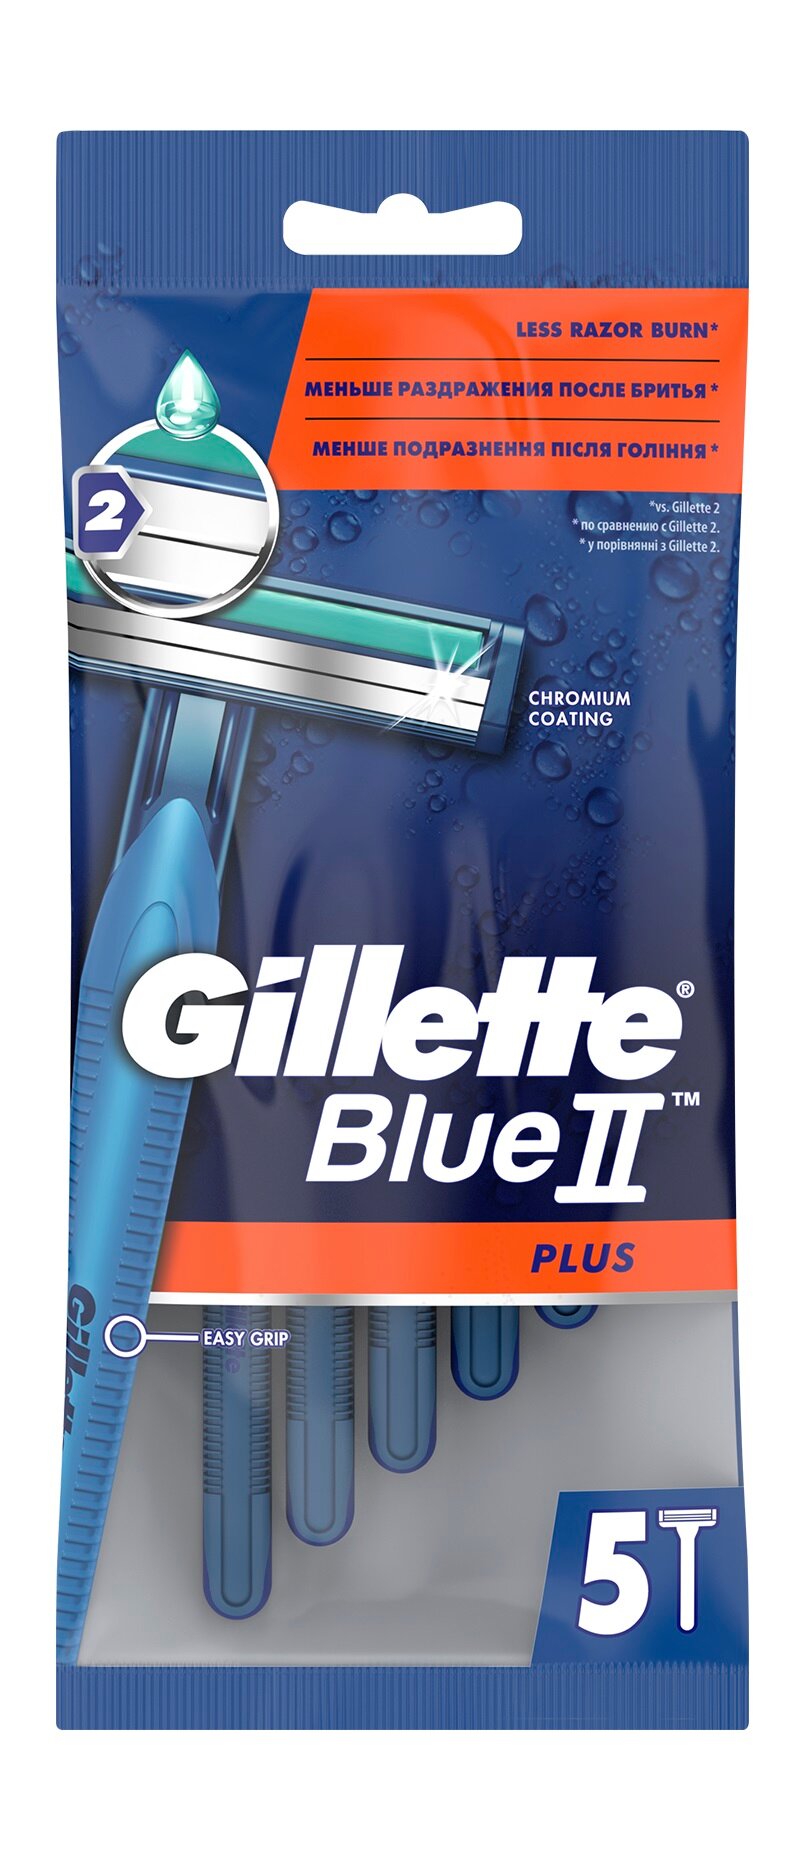 GILLETTE Одноразовые станки Blue II Plus UG 5шт